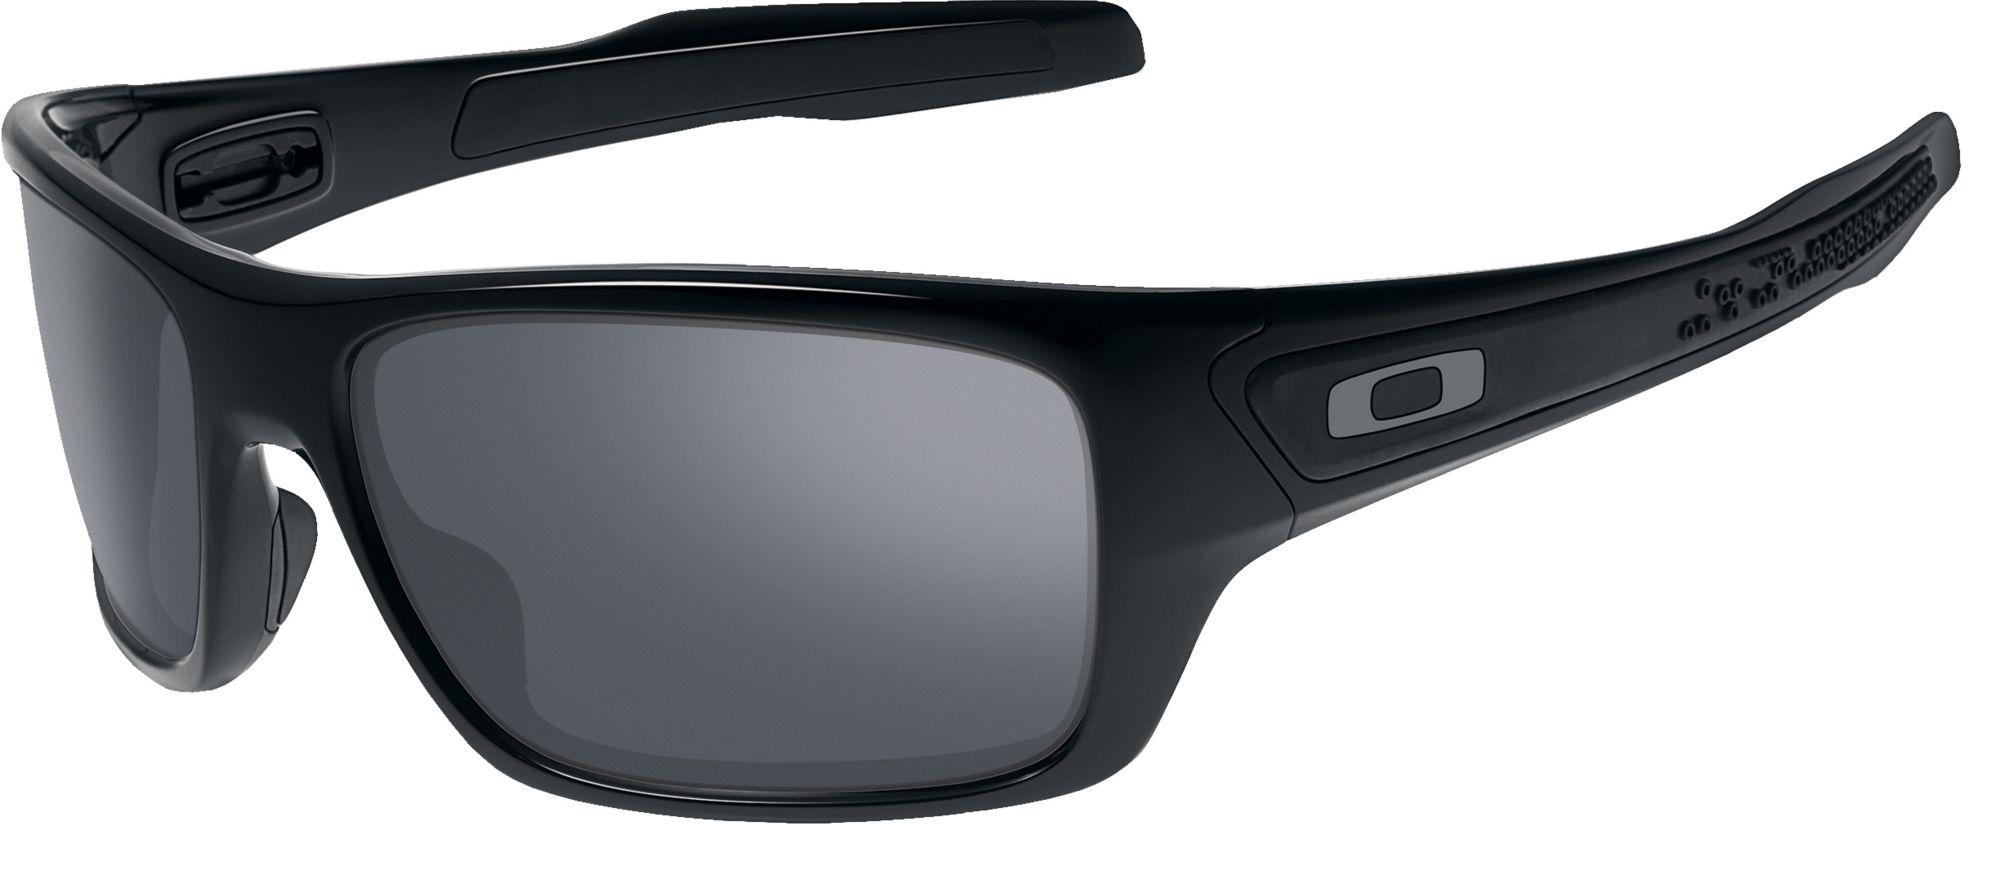 Oakley Turbine Sunglasses in Black for Men - Lyst